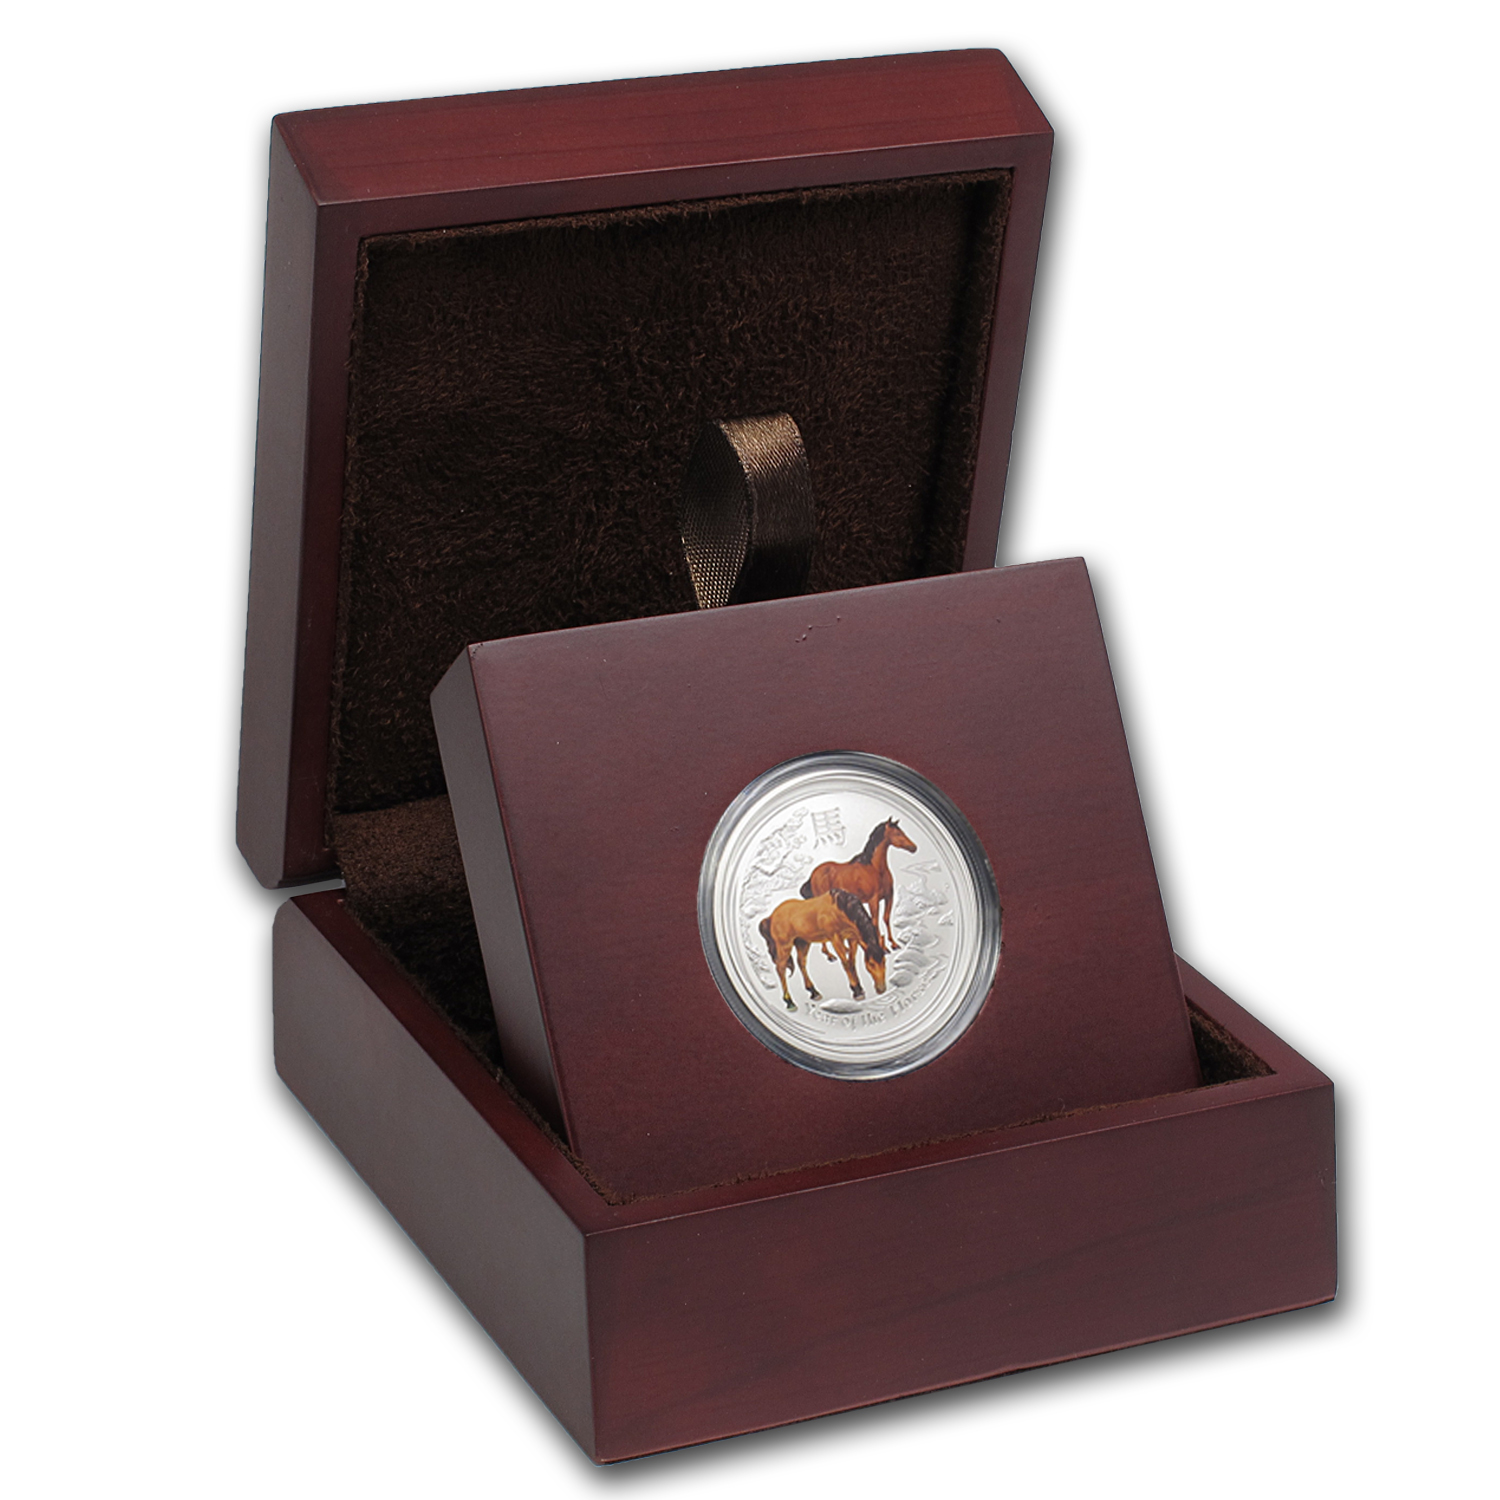 Buy APMEX Wood Gift Box - 1/2 oz Perth Mint Silver Coin Series 2